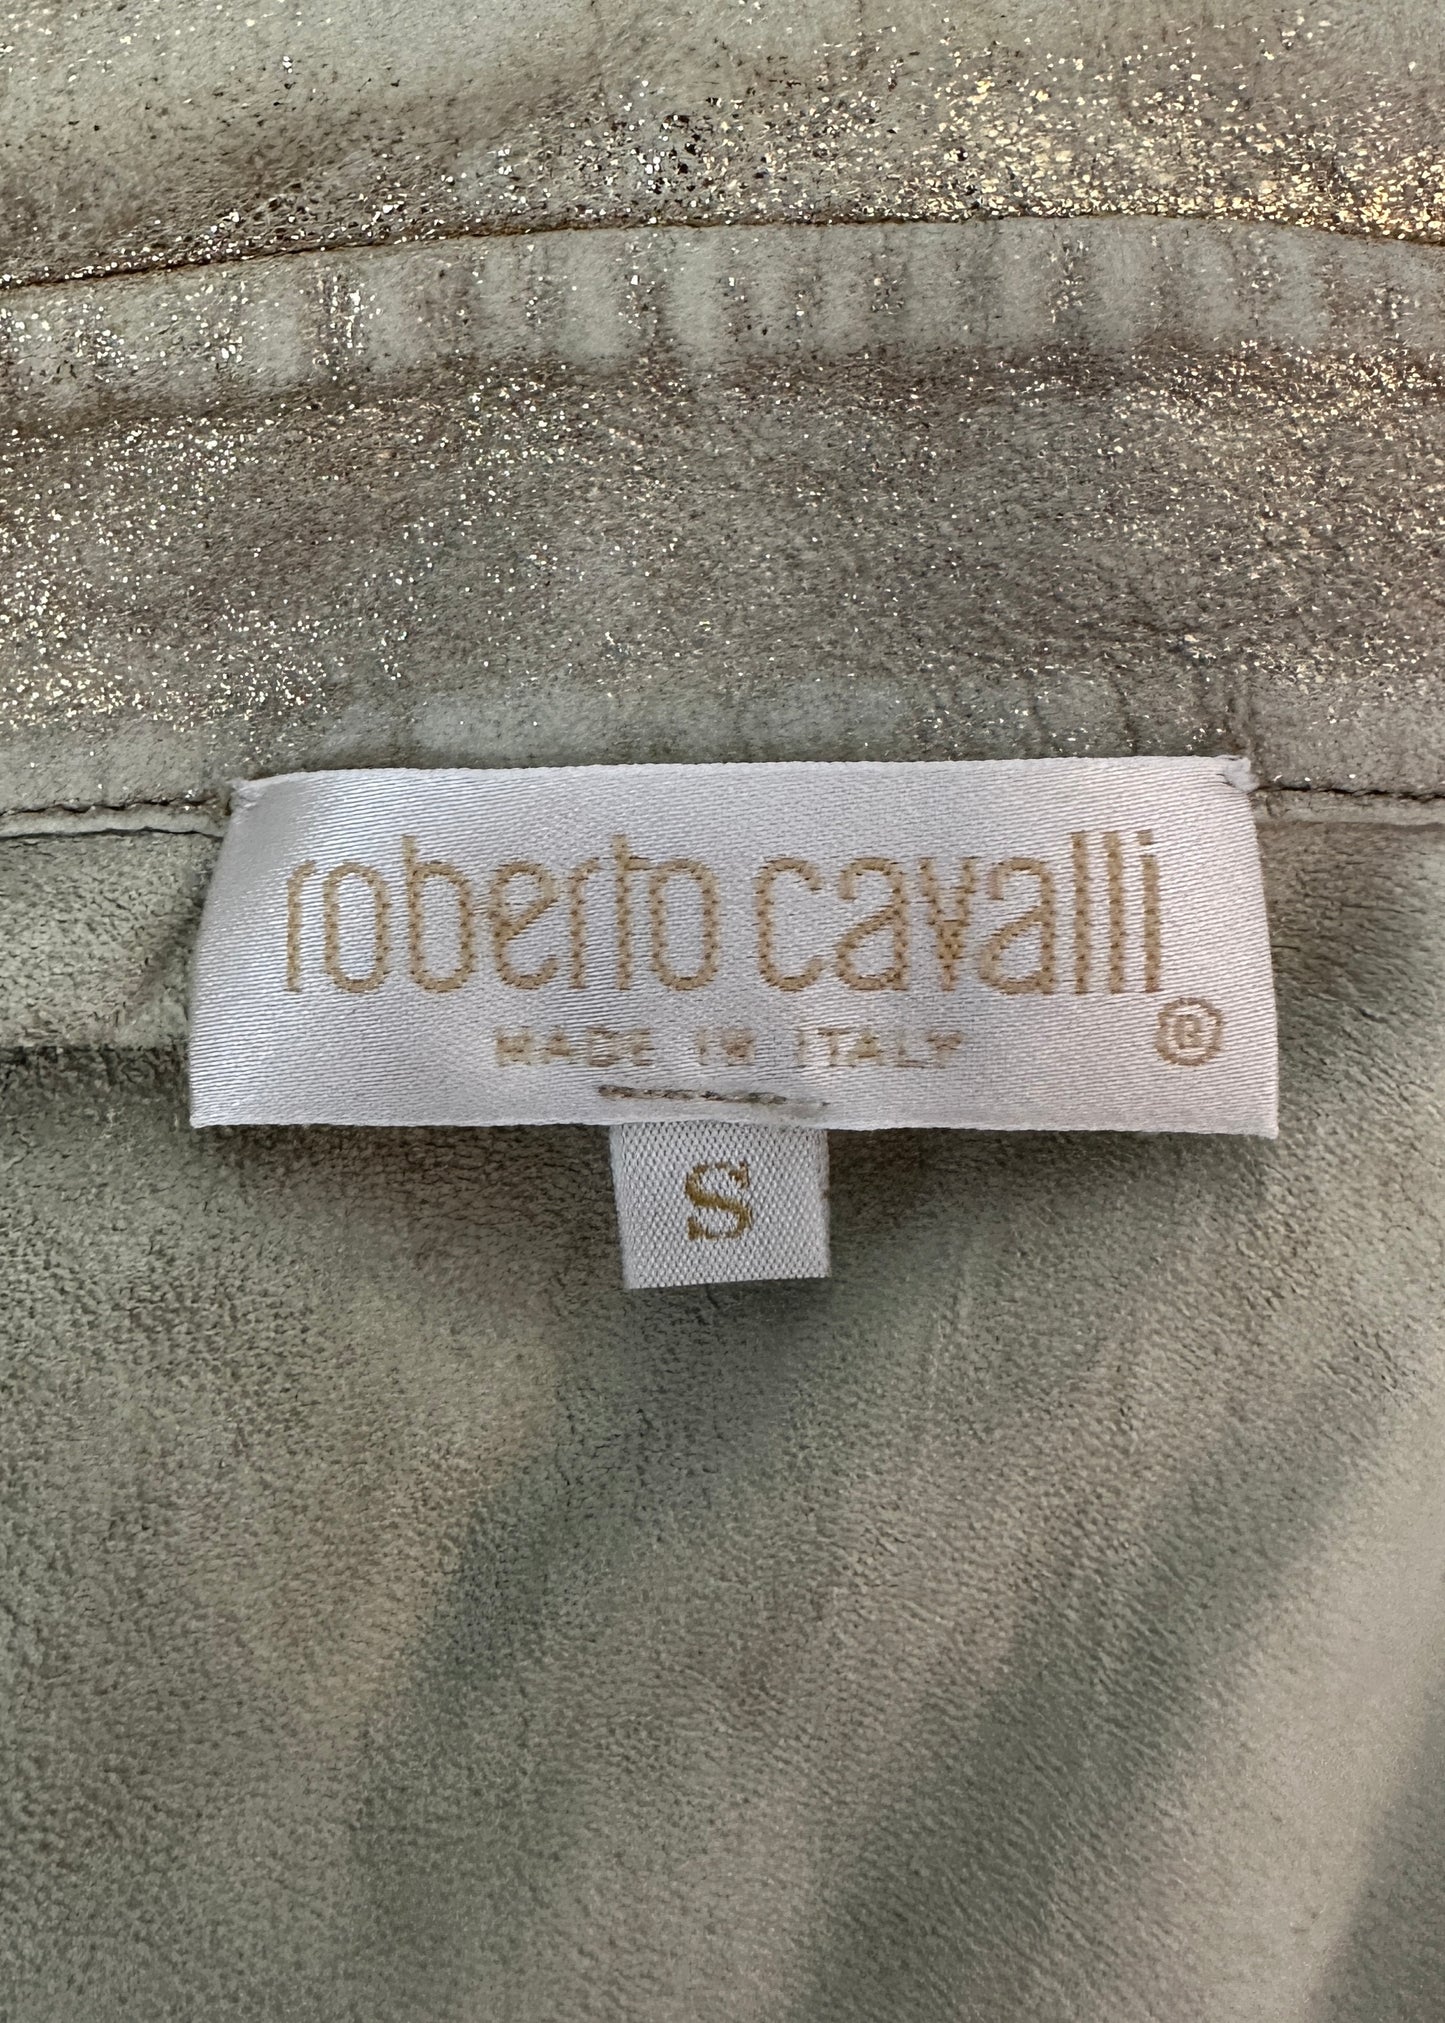 Roberto Cavalli Metallic Gold Suede Leather Shirt